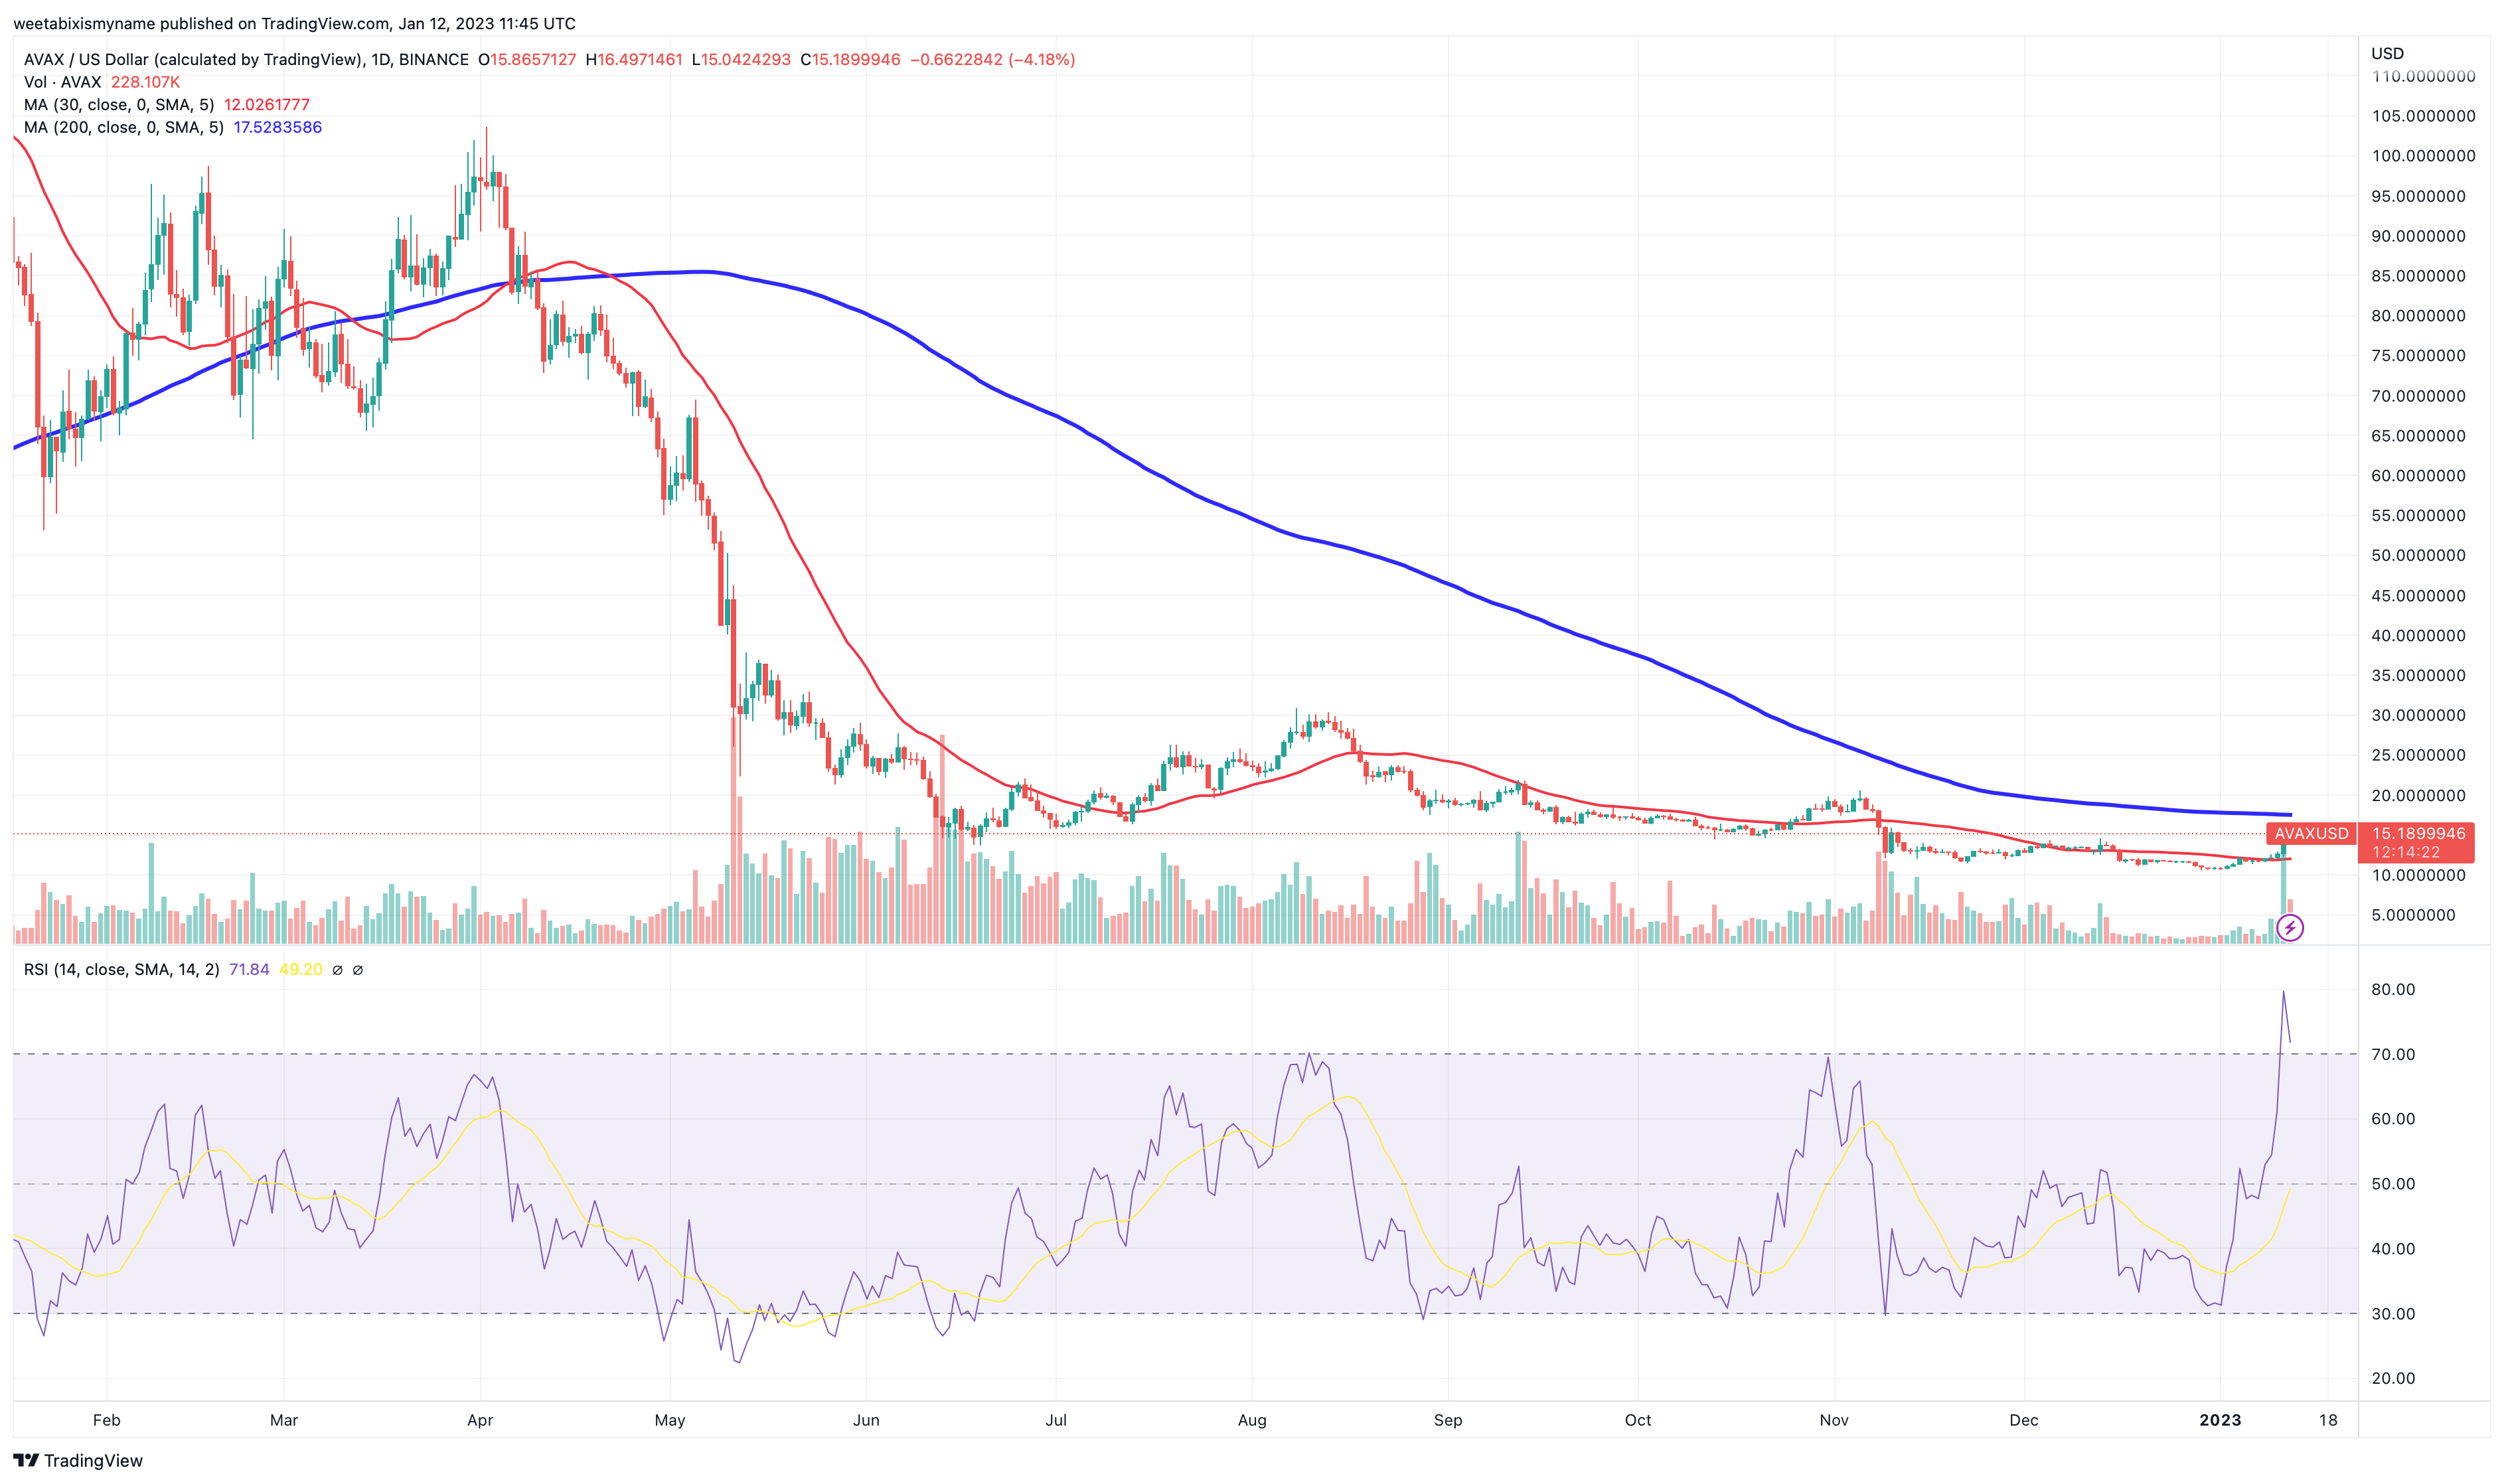 AVAX/USD Chart - Source: TradingView